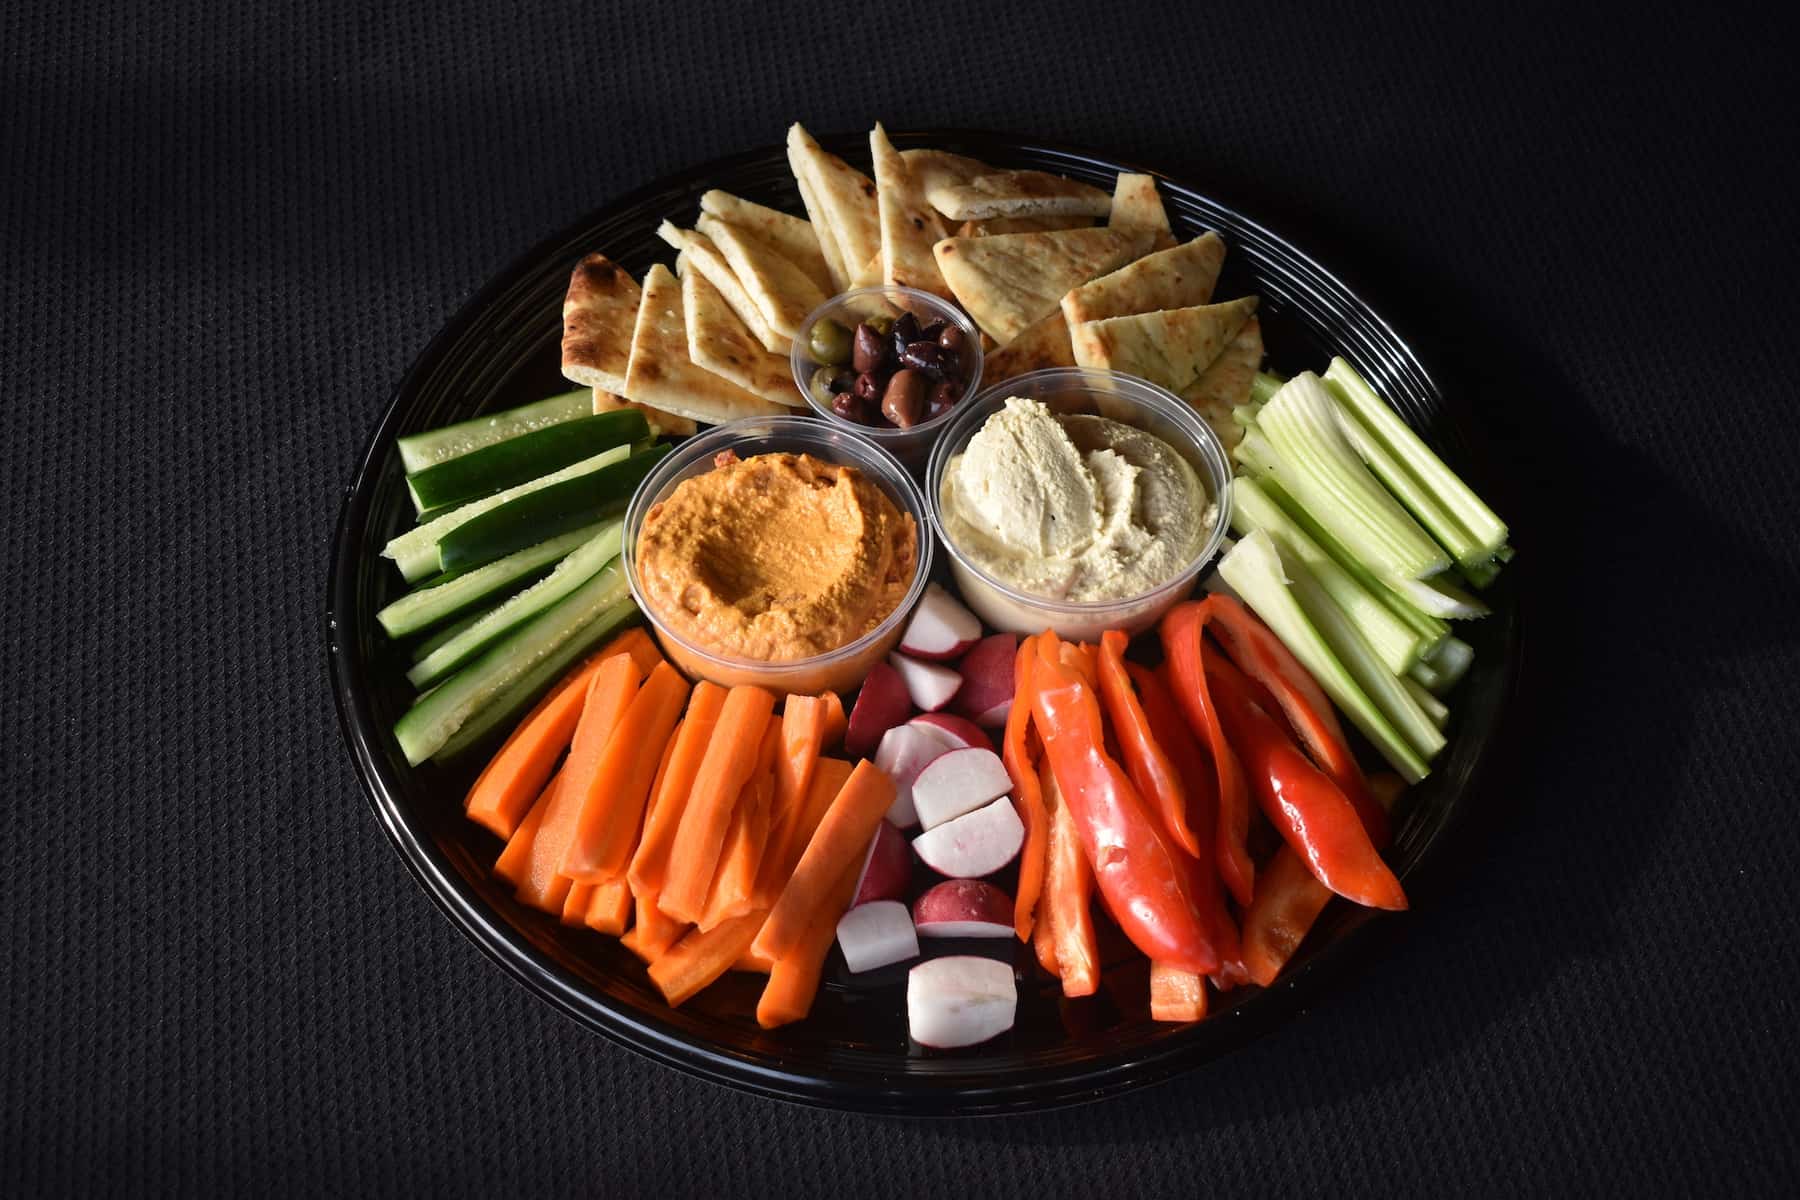 Featured image for “Hummus & Veggie Platter”